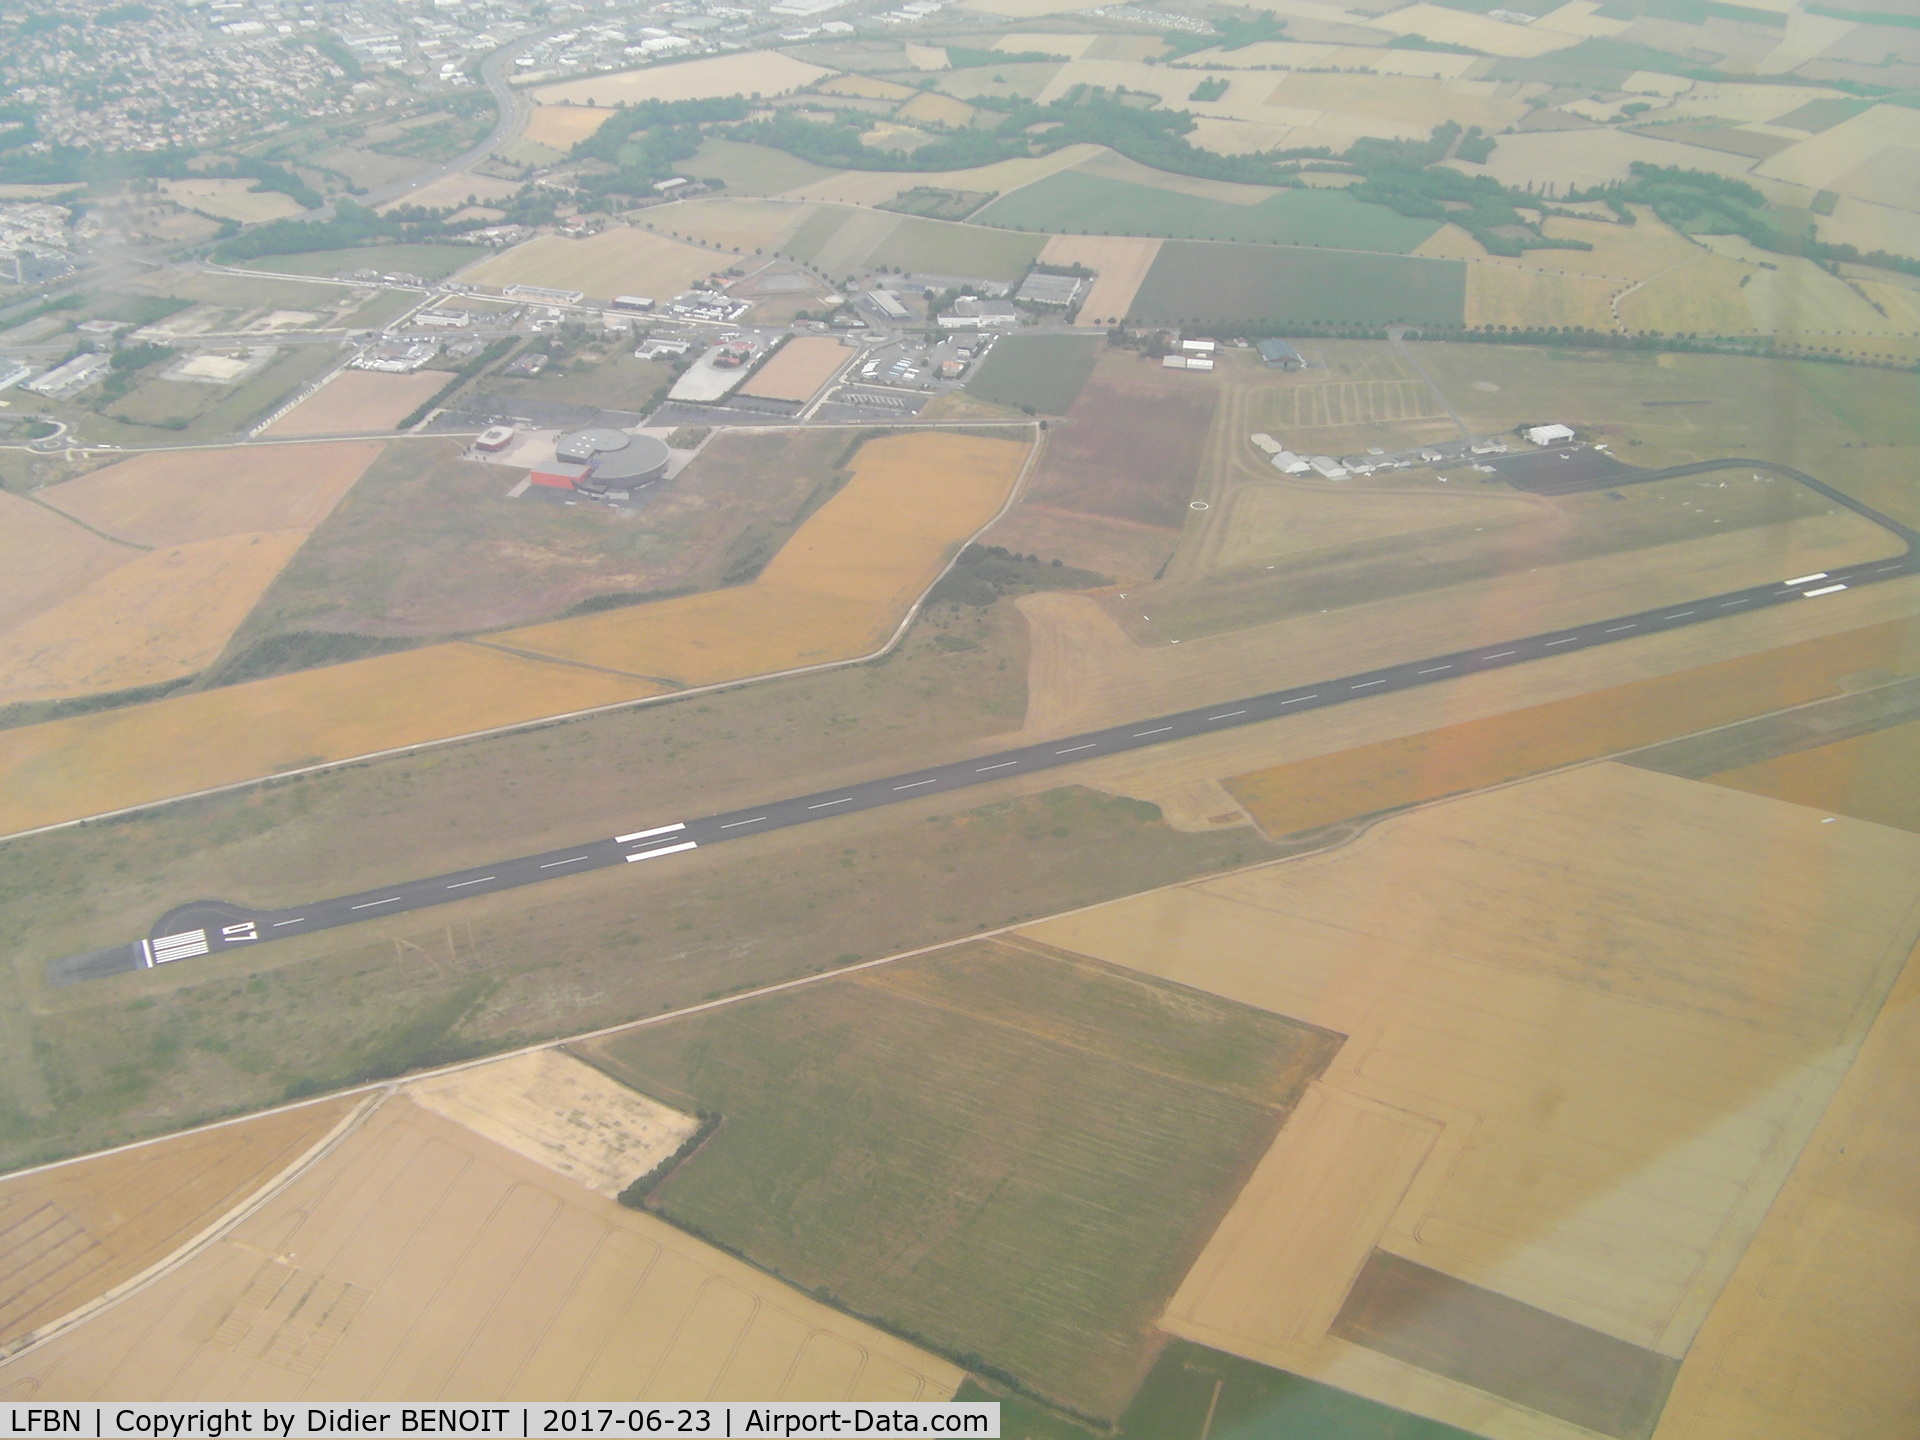 Niort Airport, Souche Airport France (LFBN) - Niort